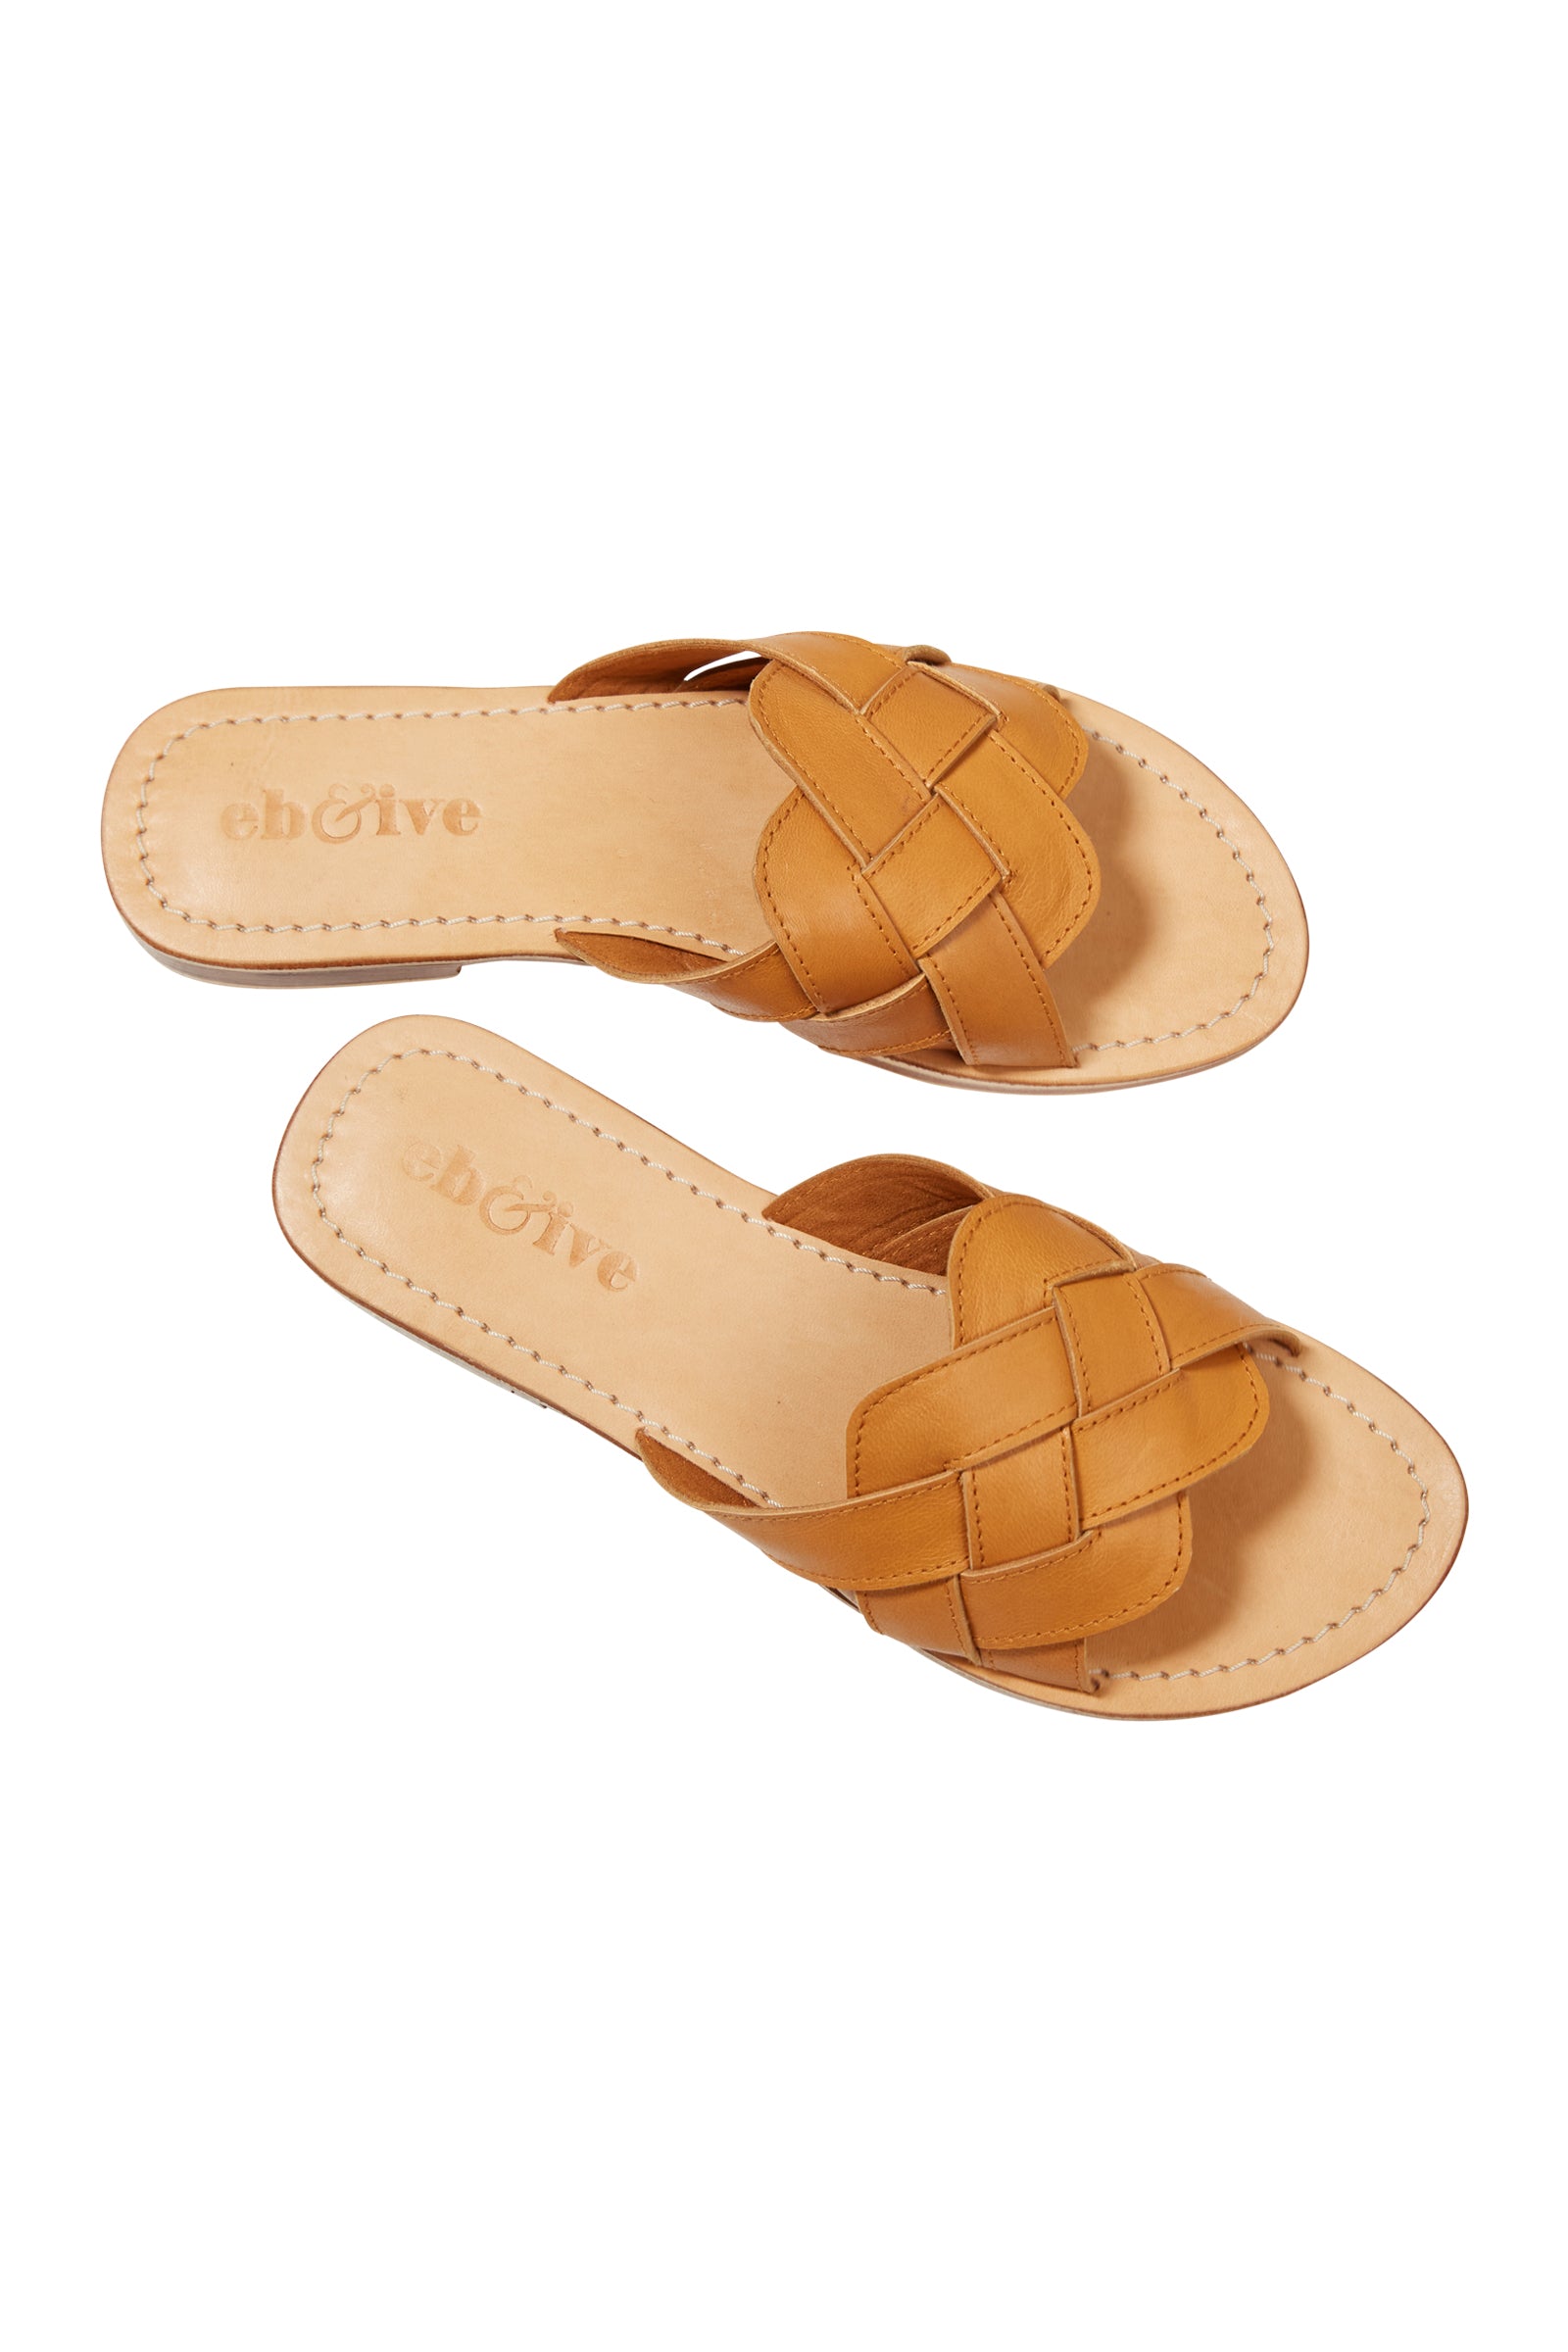 Alma Slide - Tan - eb&ive Footwear - Sandals